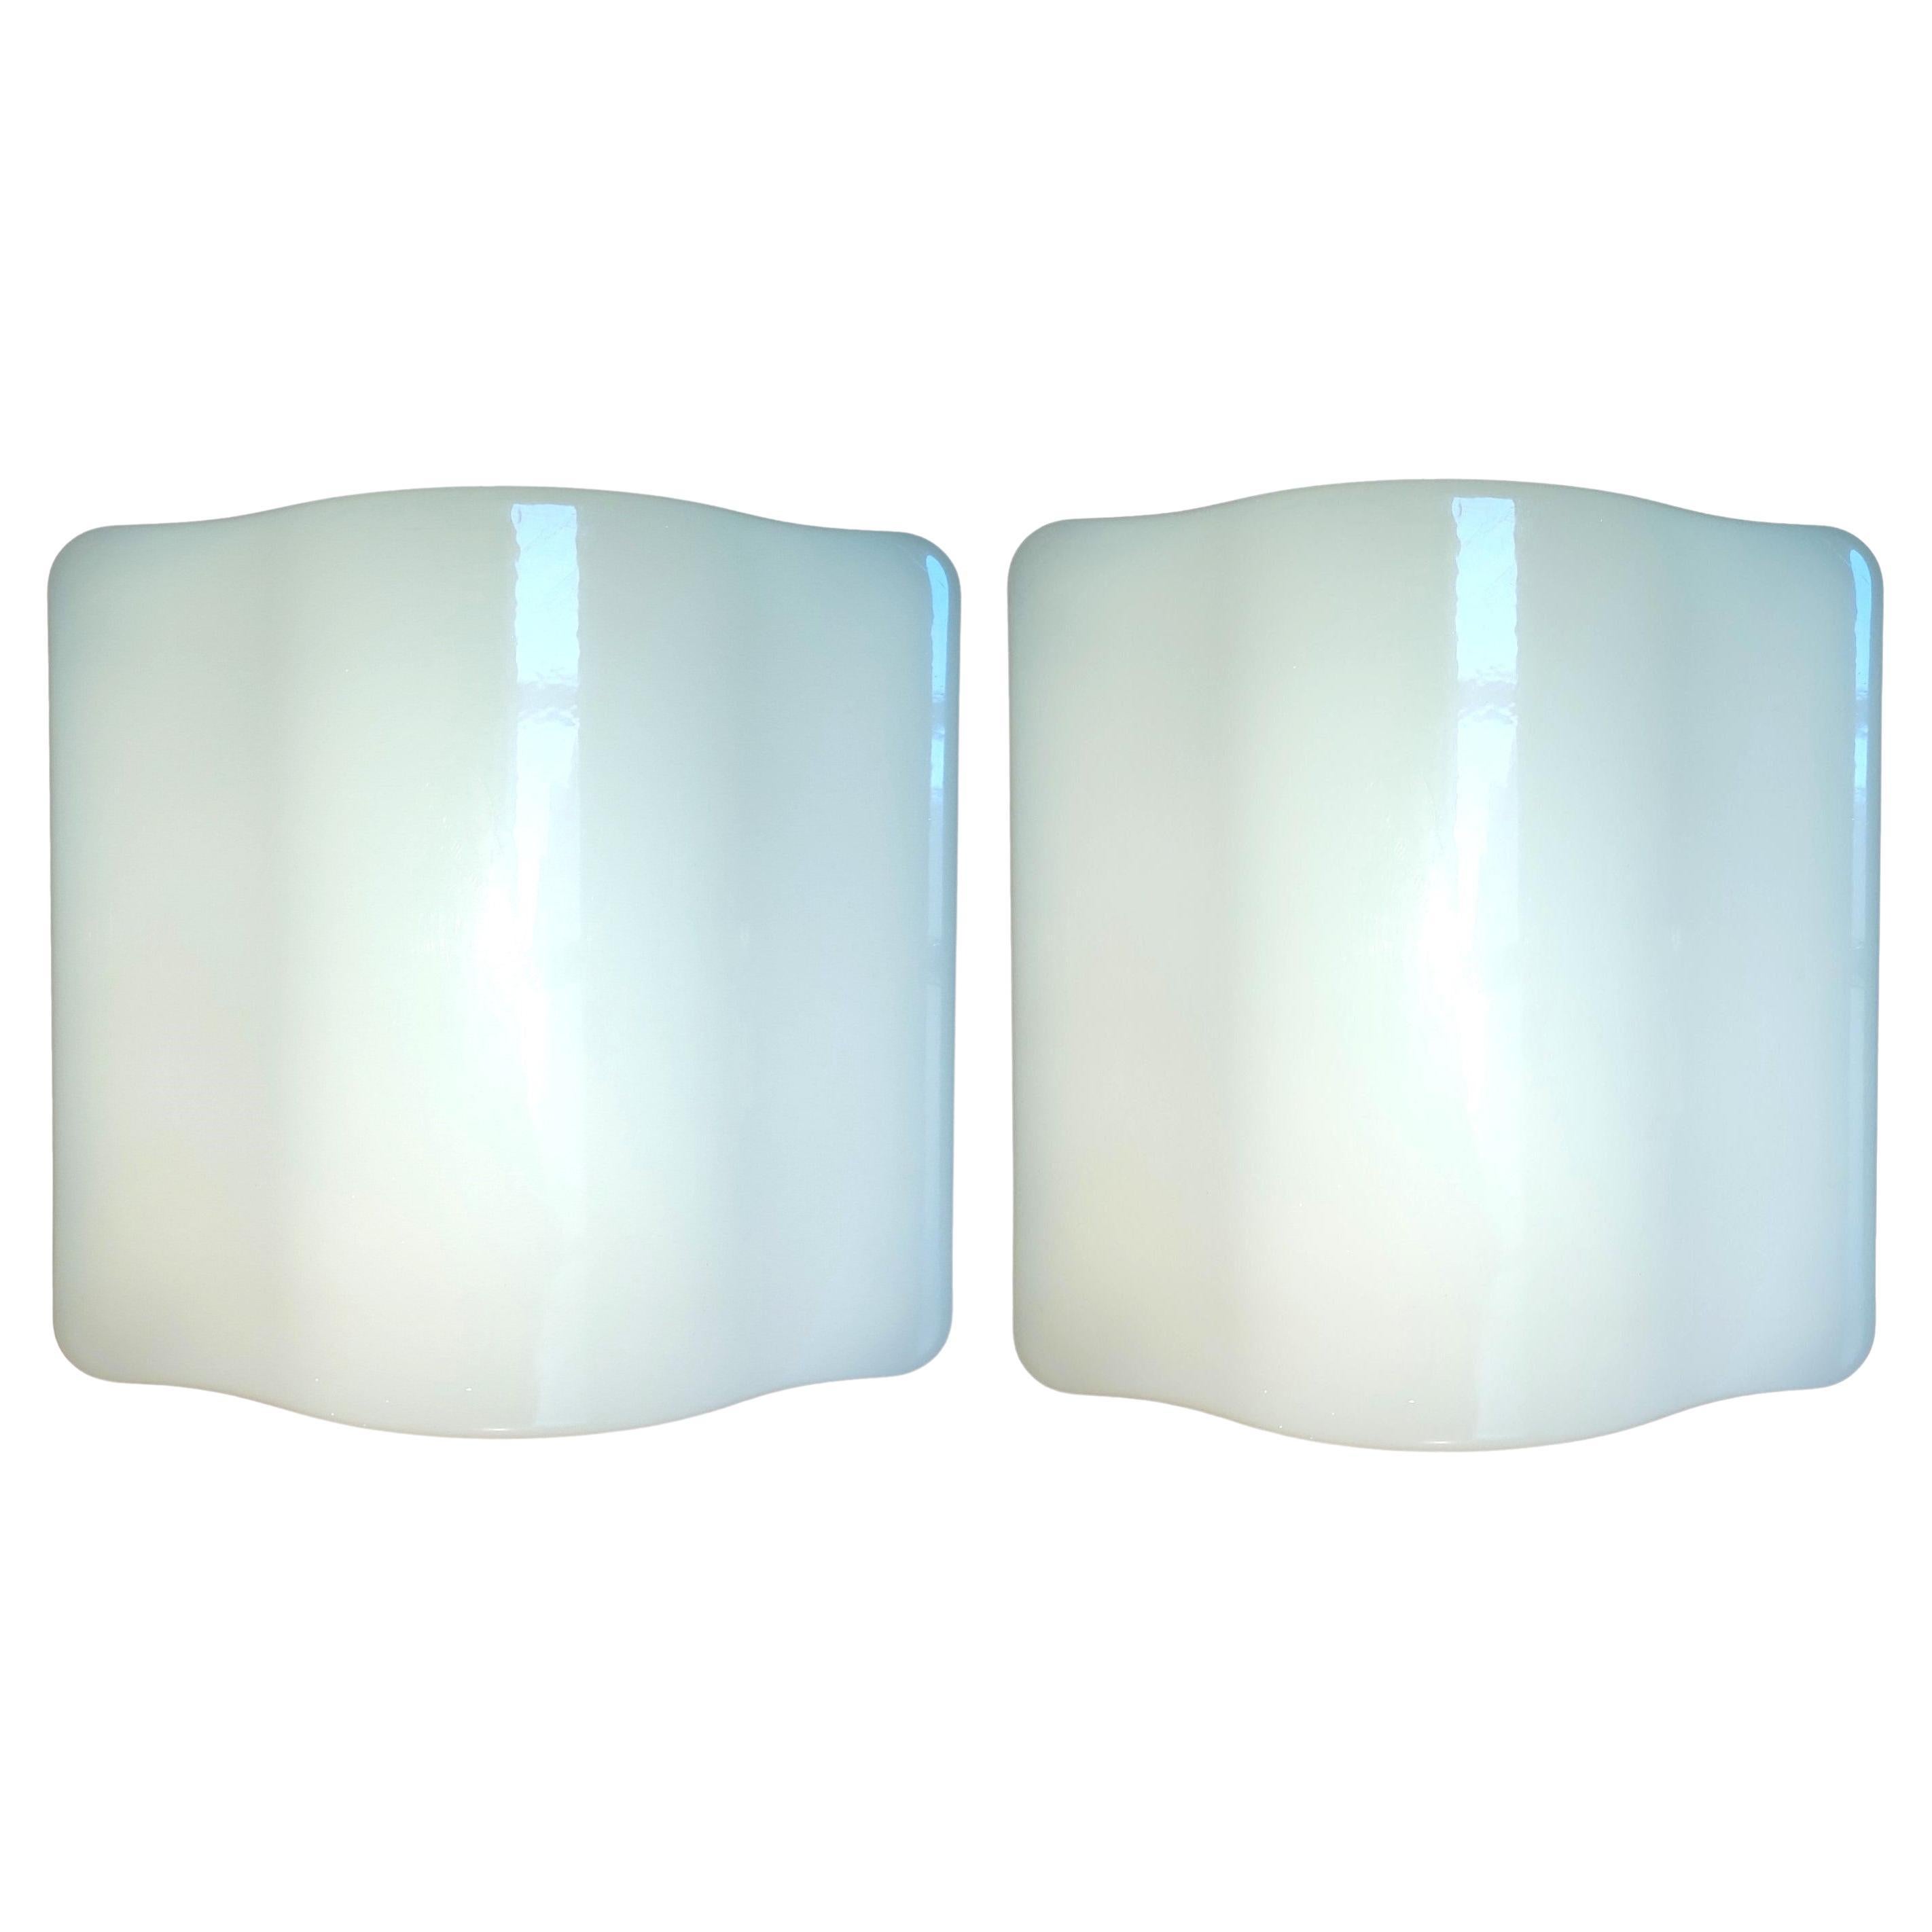 pair of wall lamps iguzzini wall lamps wave model 5360 - guzzini 50x50 For Sale